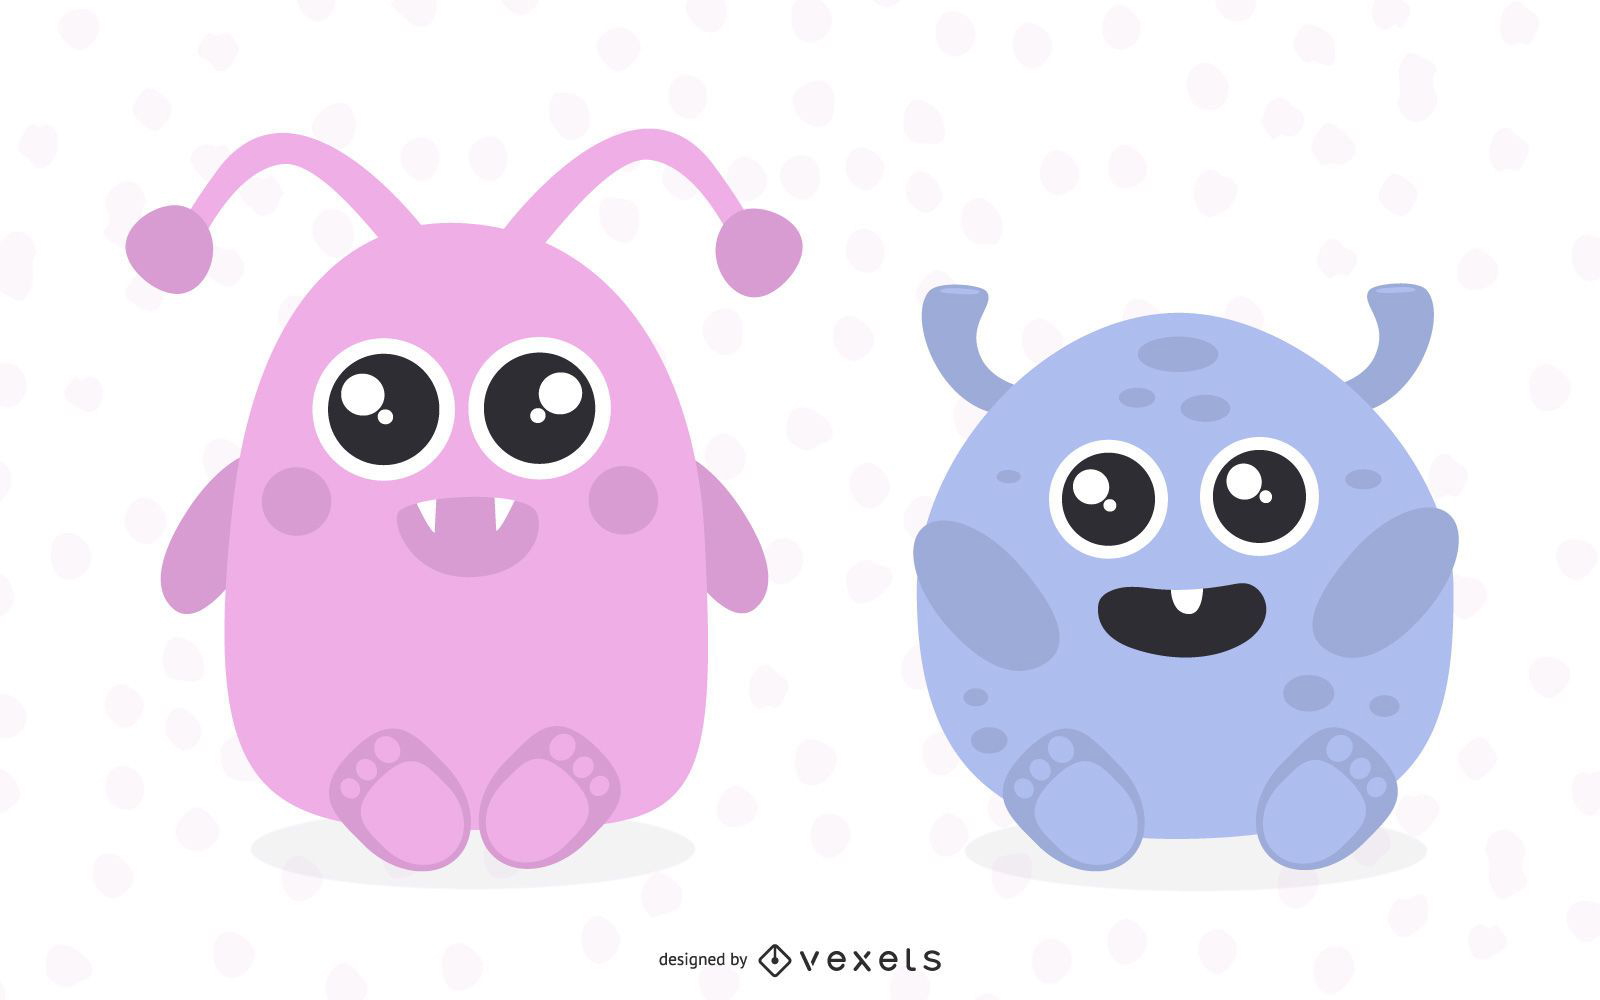 Cute monsters illustrations set